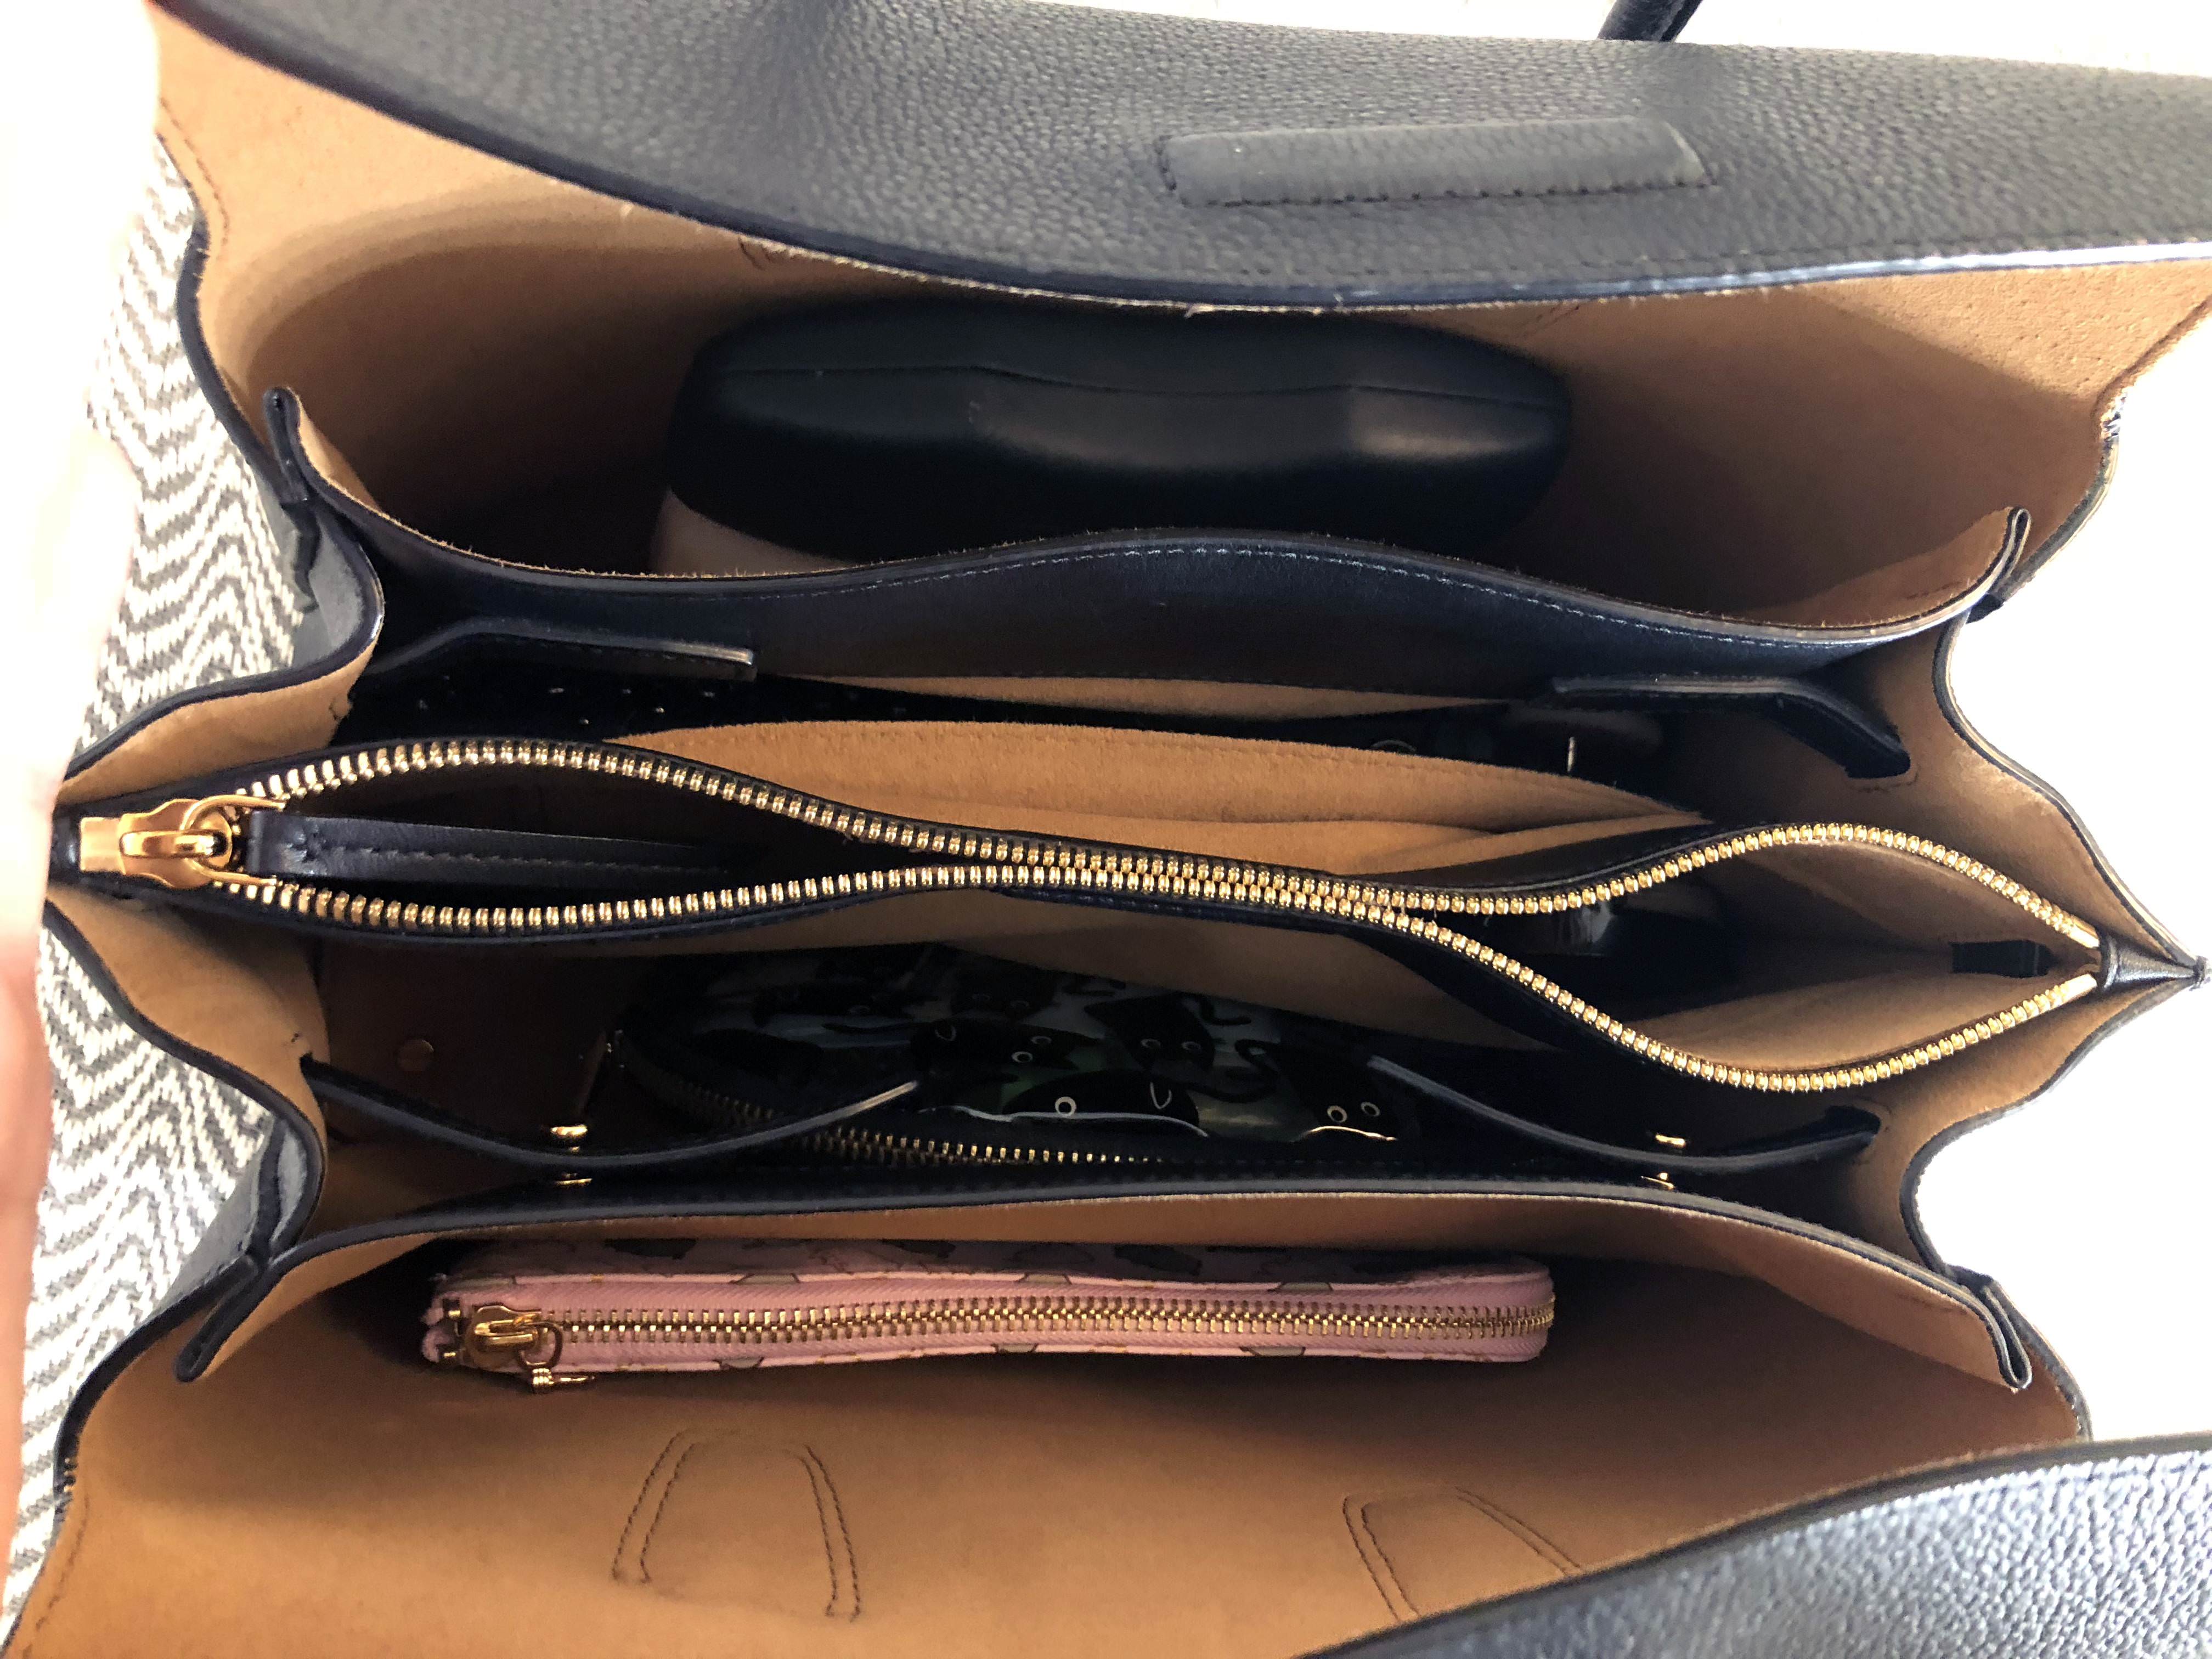 My New MCM Bag Adds a Bright Pop of Color - PurseBlog